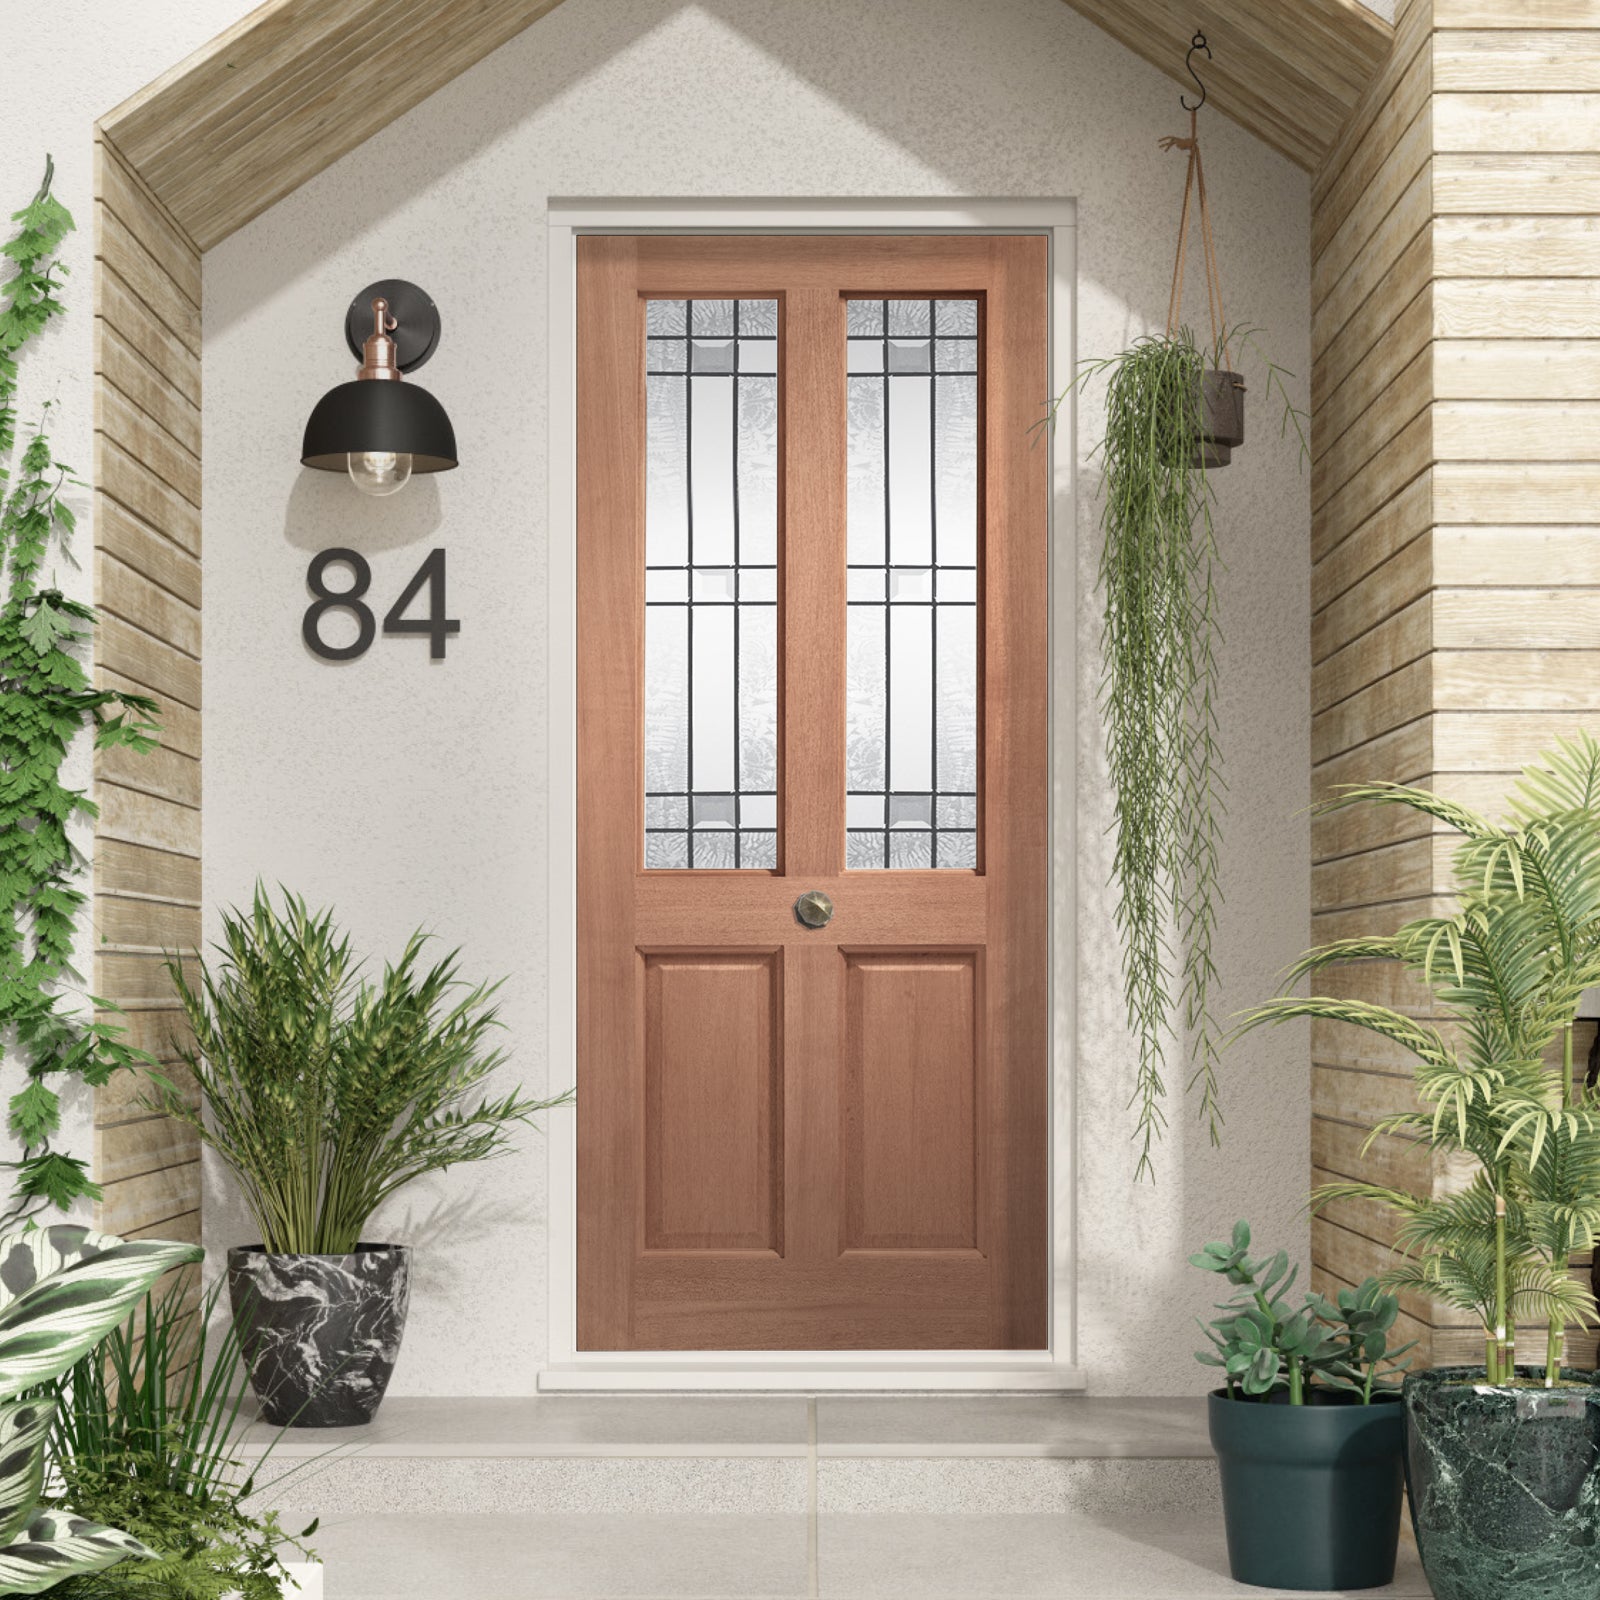 SHOW External Hardwood Malton Door with Double Glazed Drydon Glass lifestyle